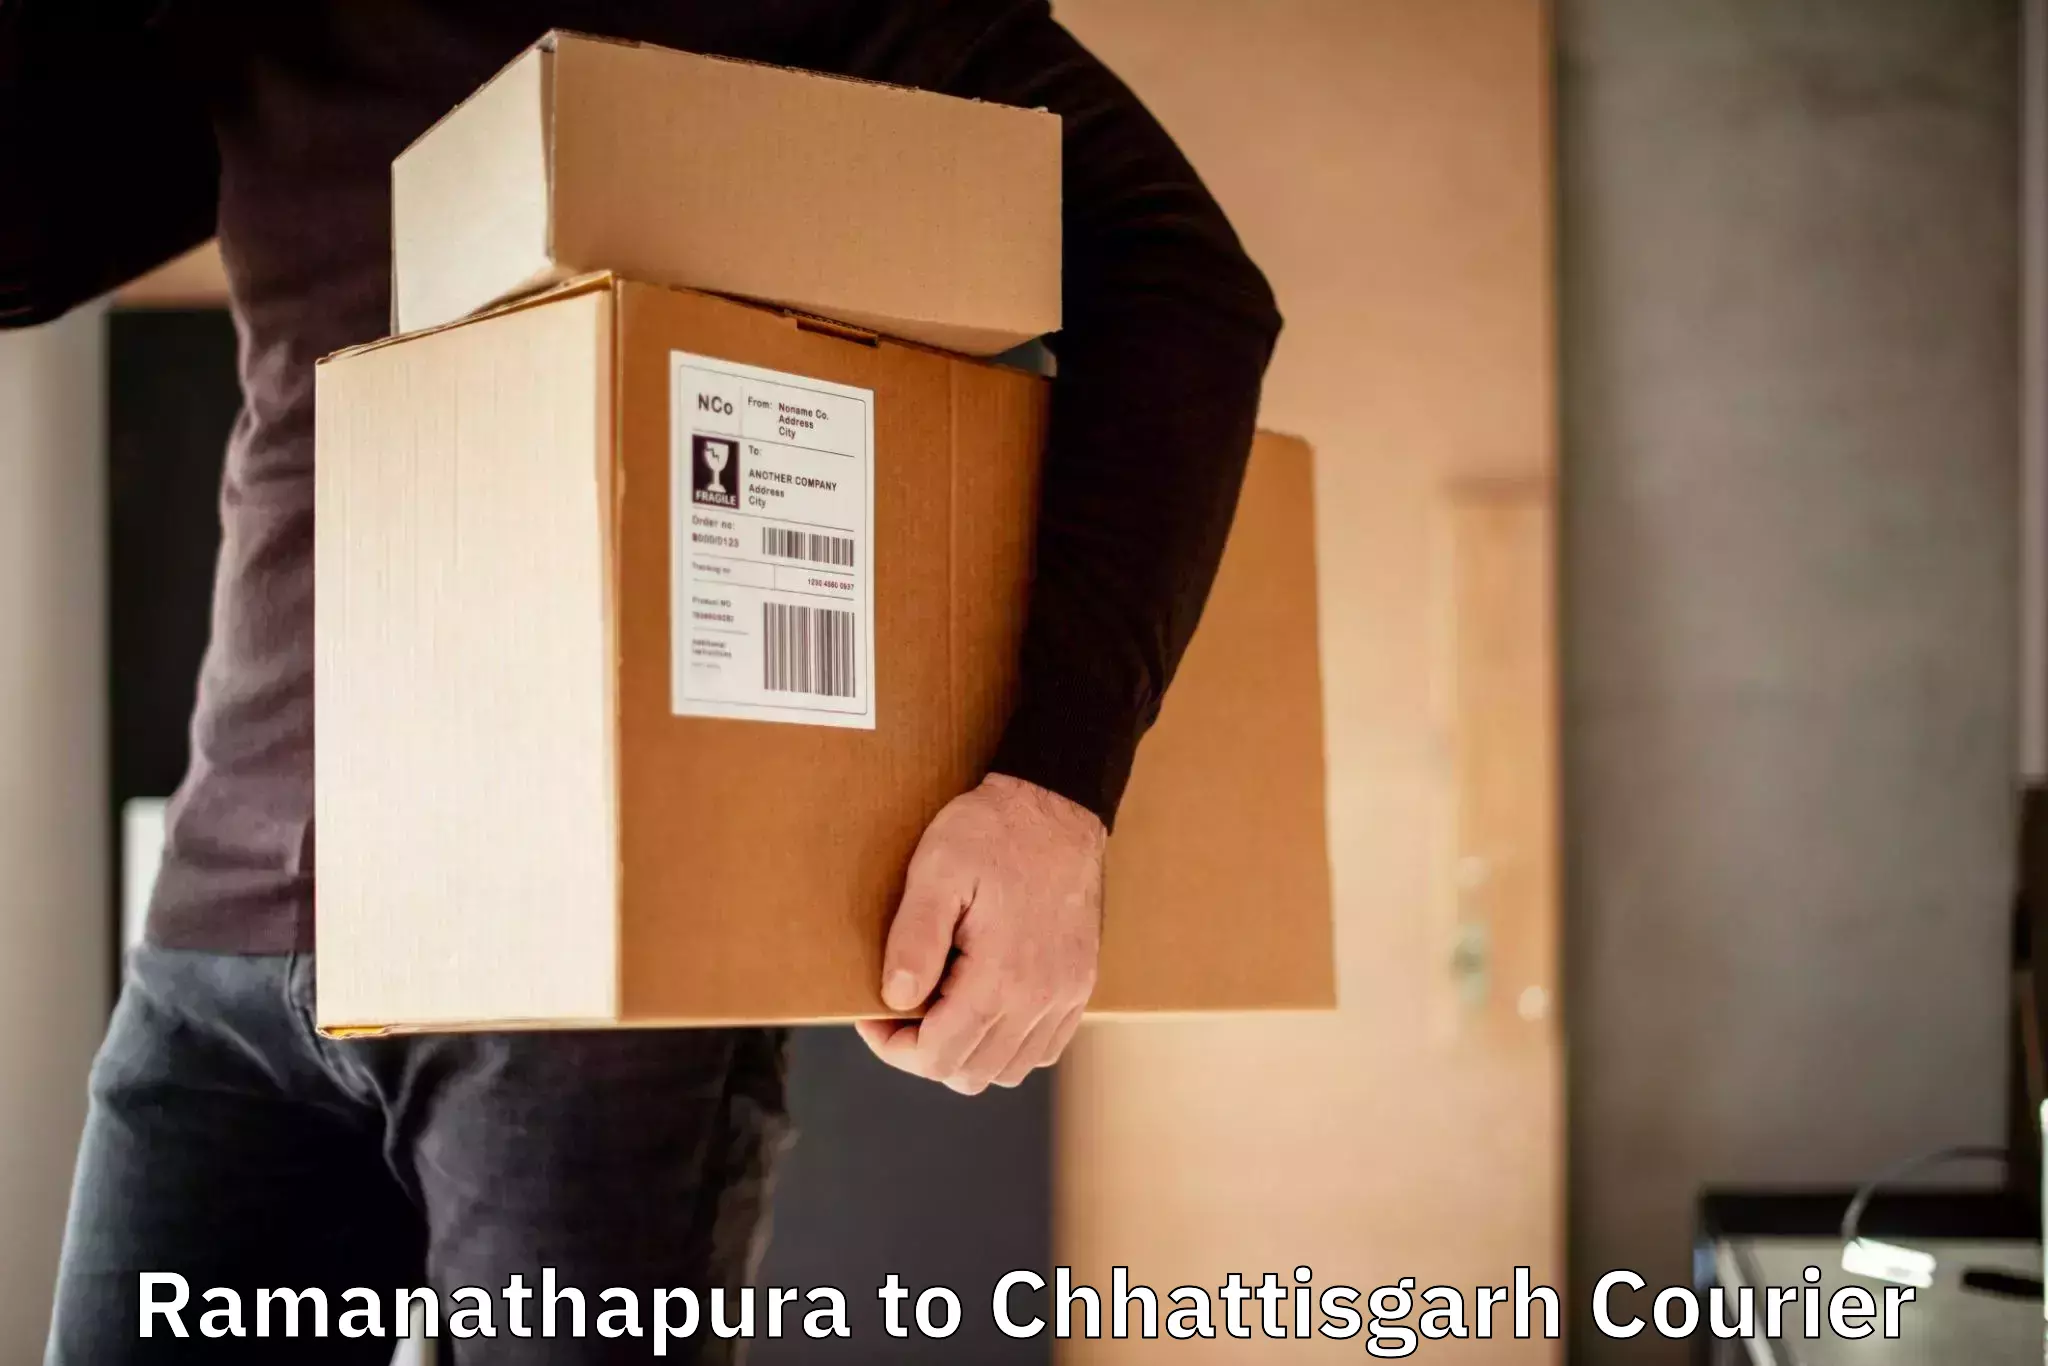 State-of-the-art courier technology Ramanathapura to Chhattisgarh